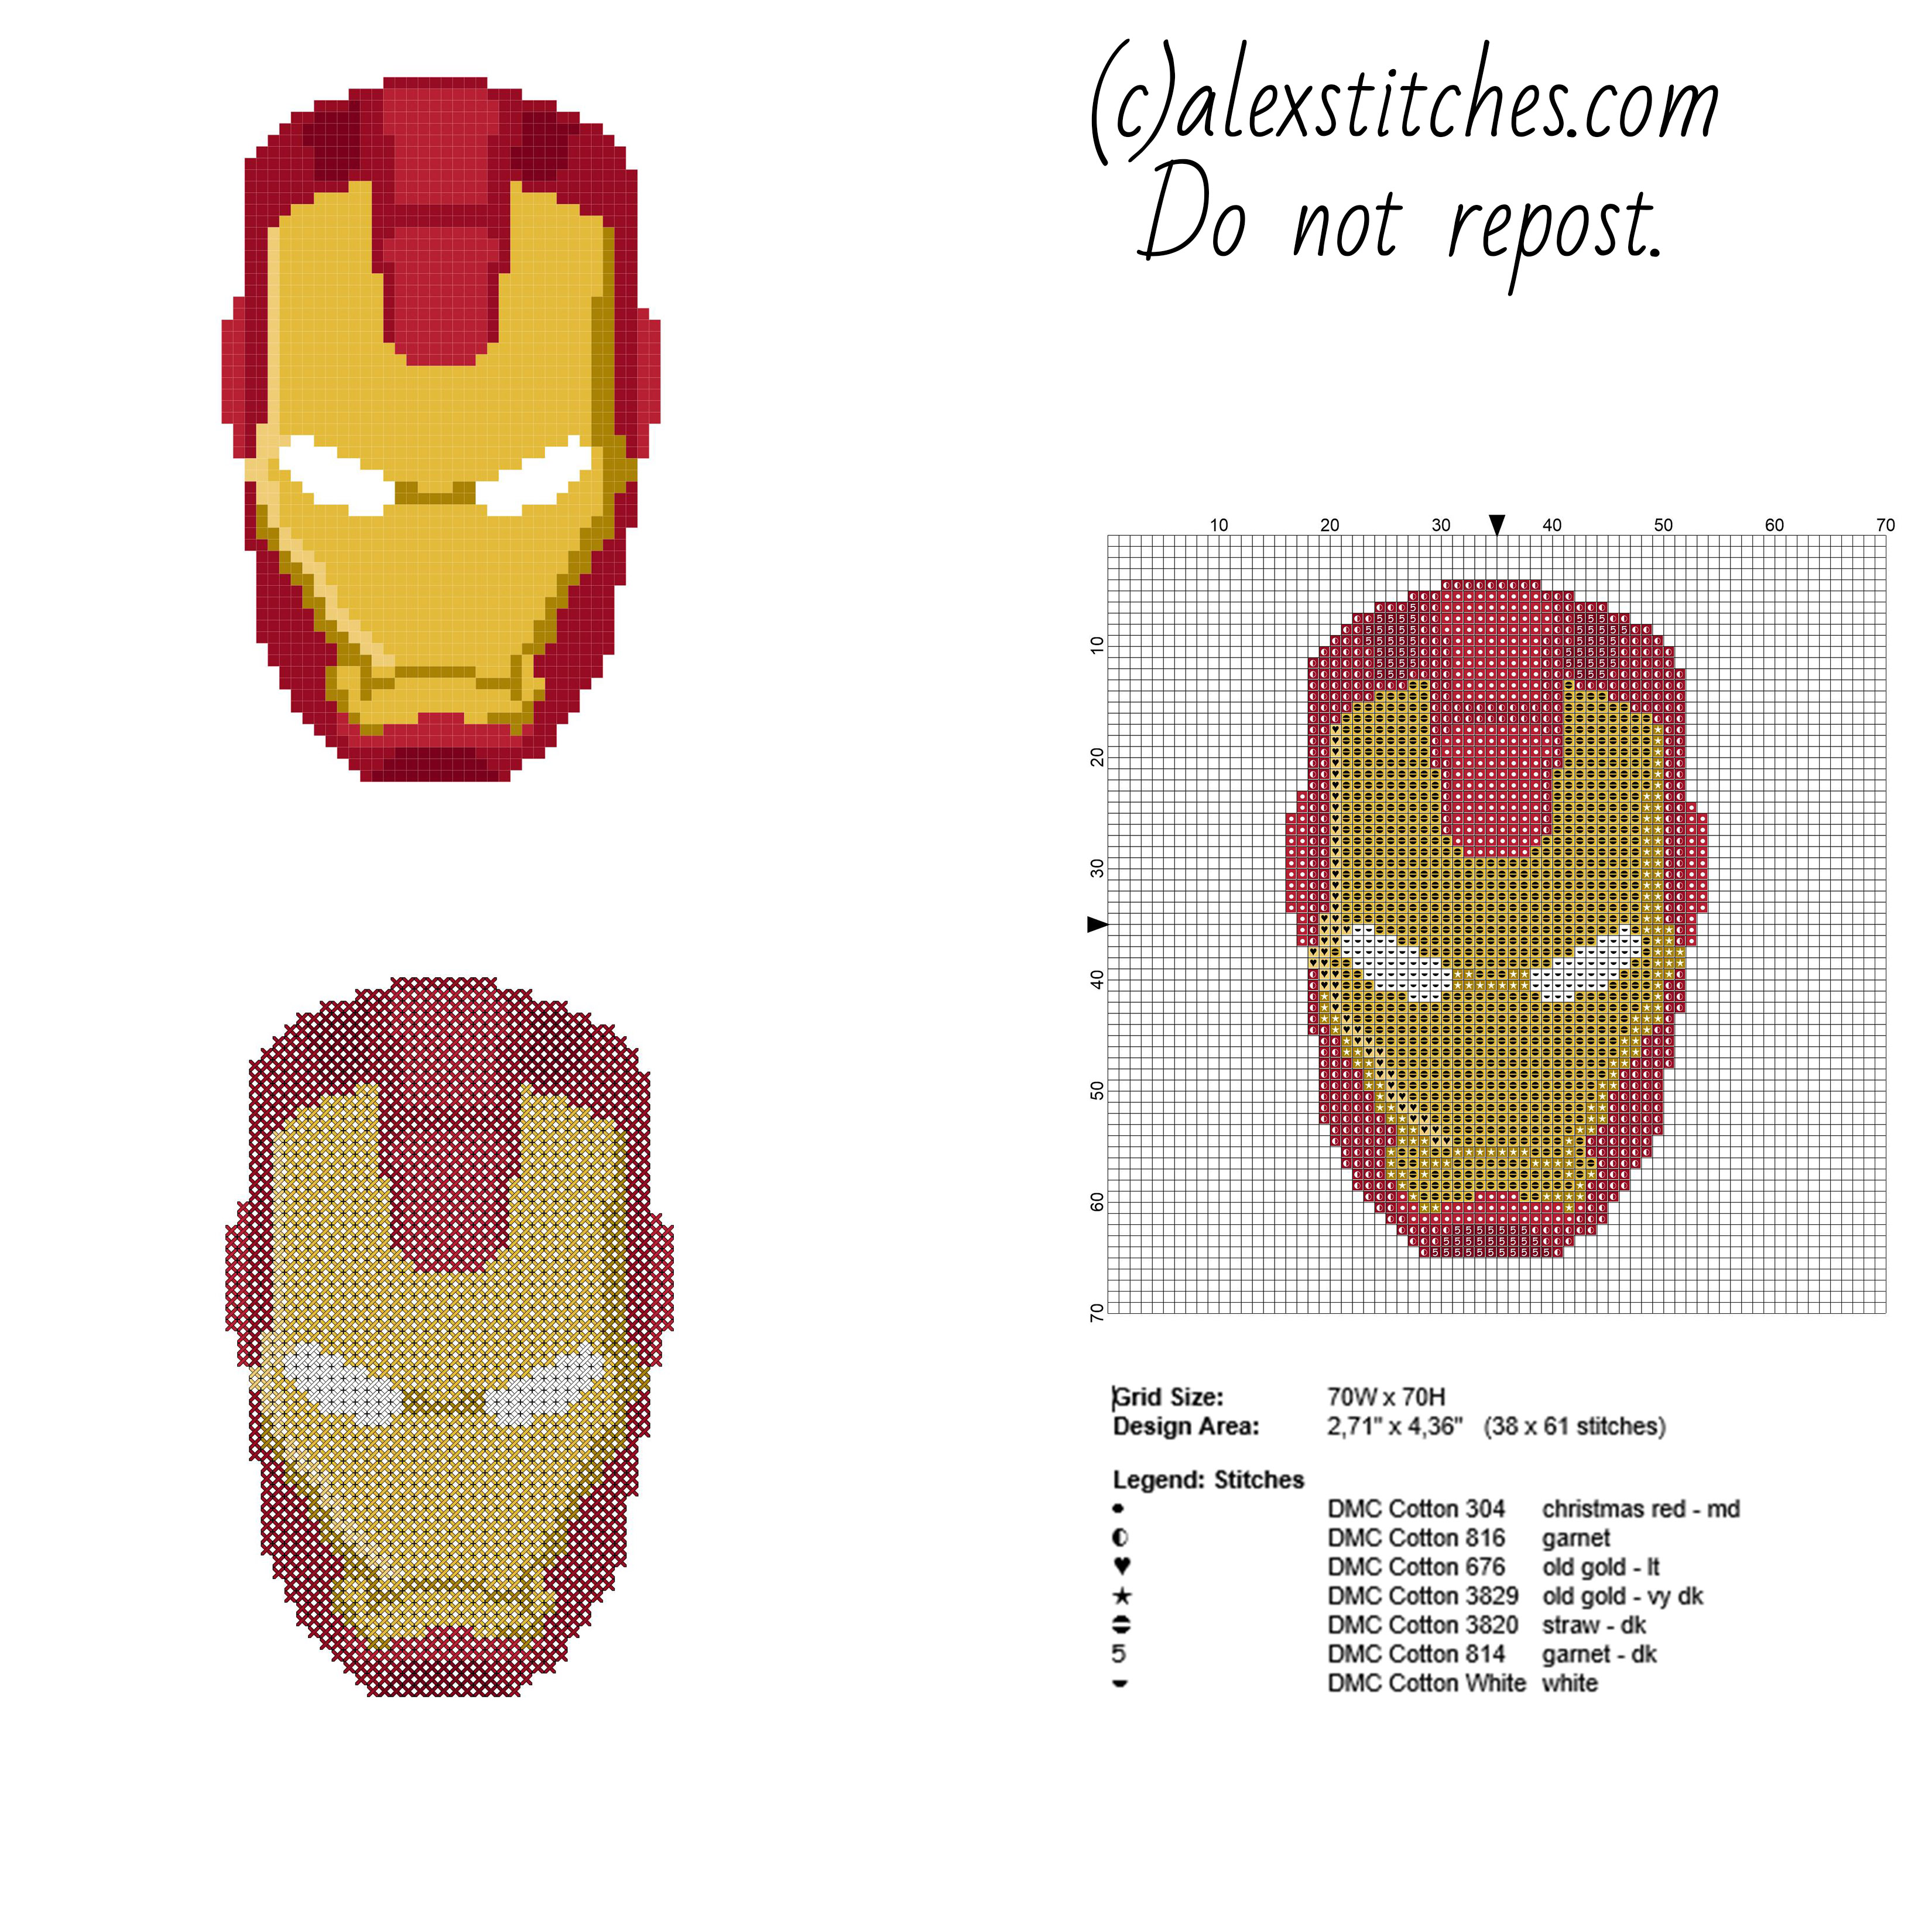 Superhero Ironman face free and small cross stitch pattern 38 x 61 stitches 7 DMC threads